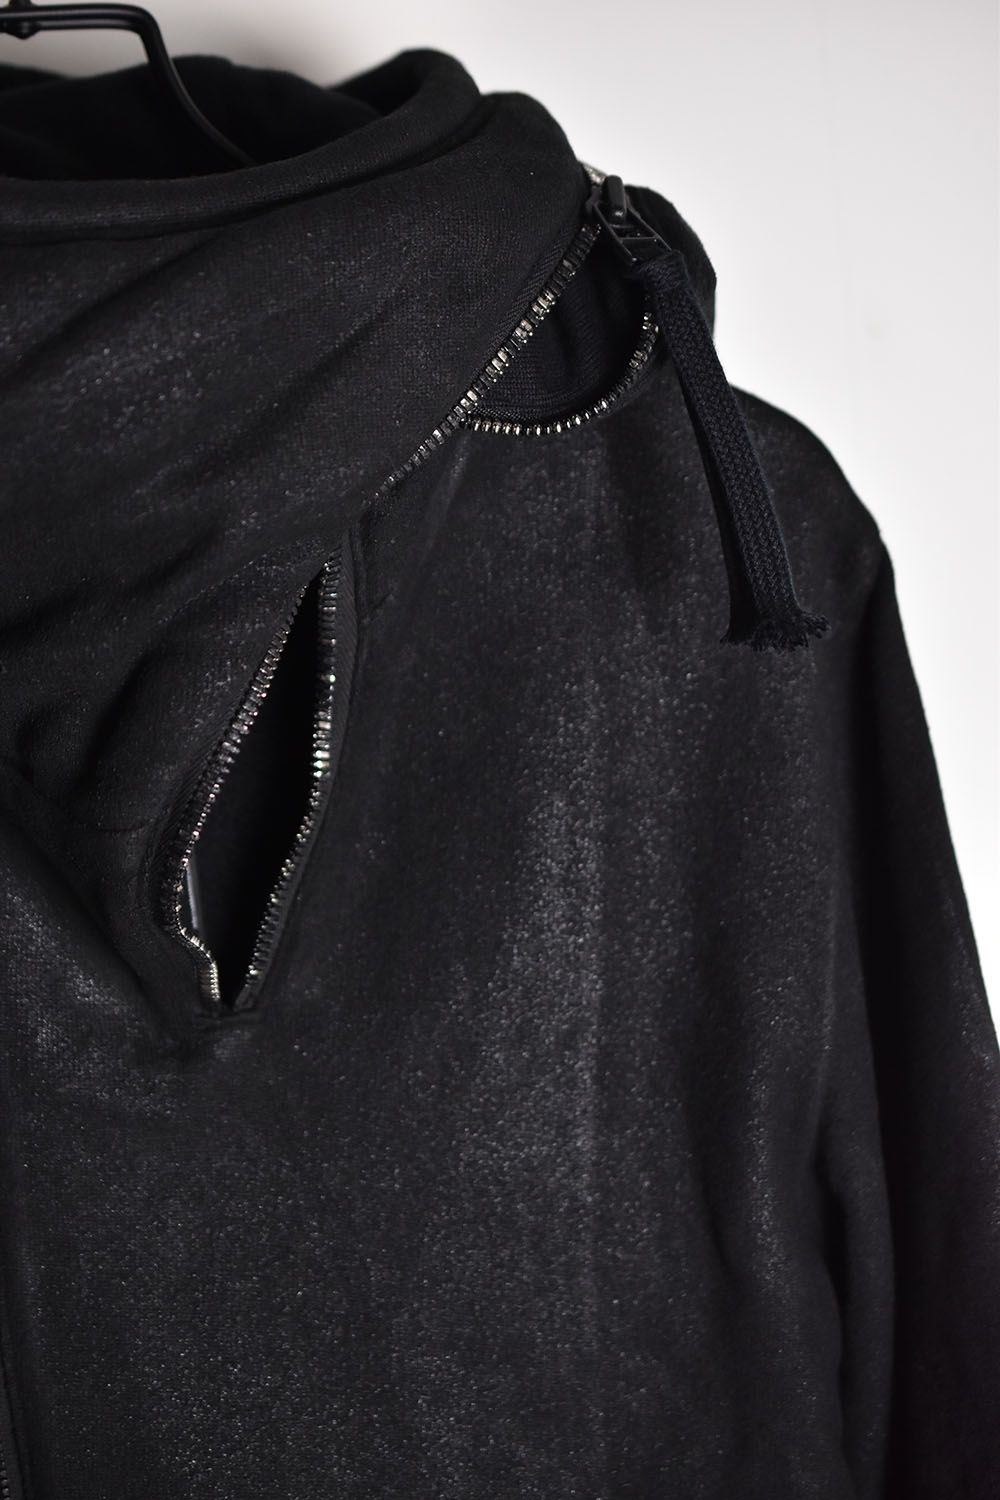 Coating Double Zip Hooded Jacket"Black"/無撚糸裏毛コーティングダブルジップフーデッドジャケット"ブラック"